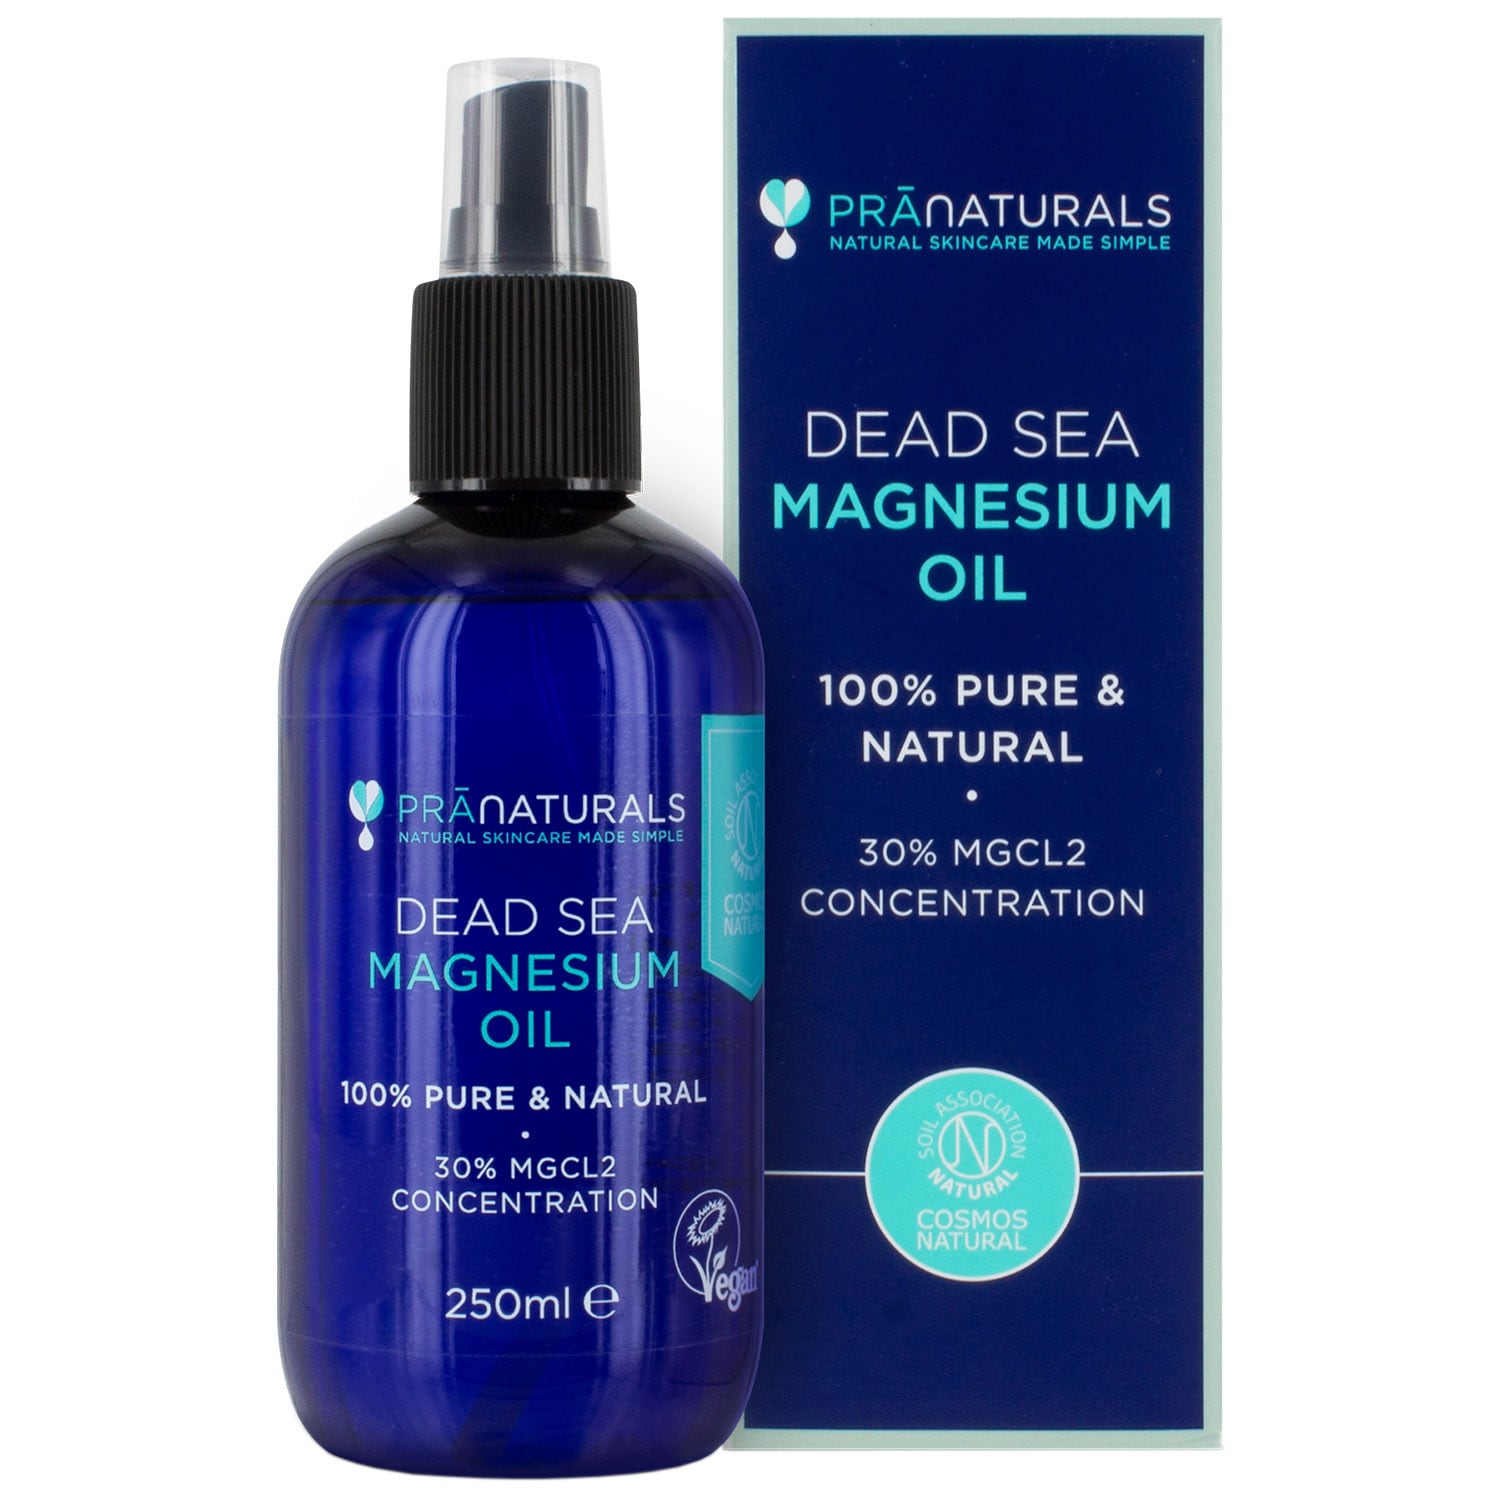 PraNaturals Magnesium oil from the Dead Sea